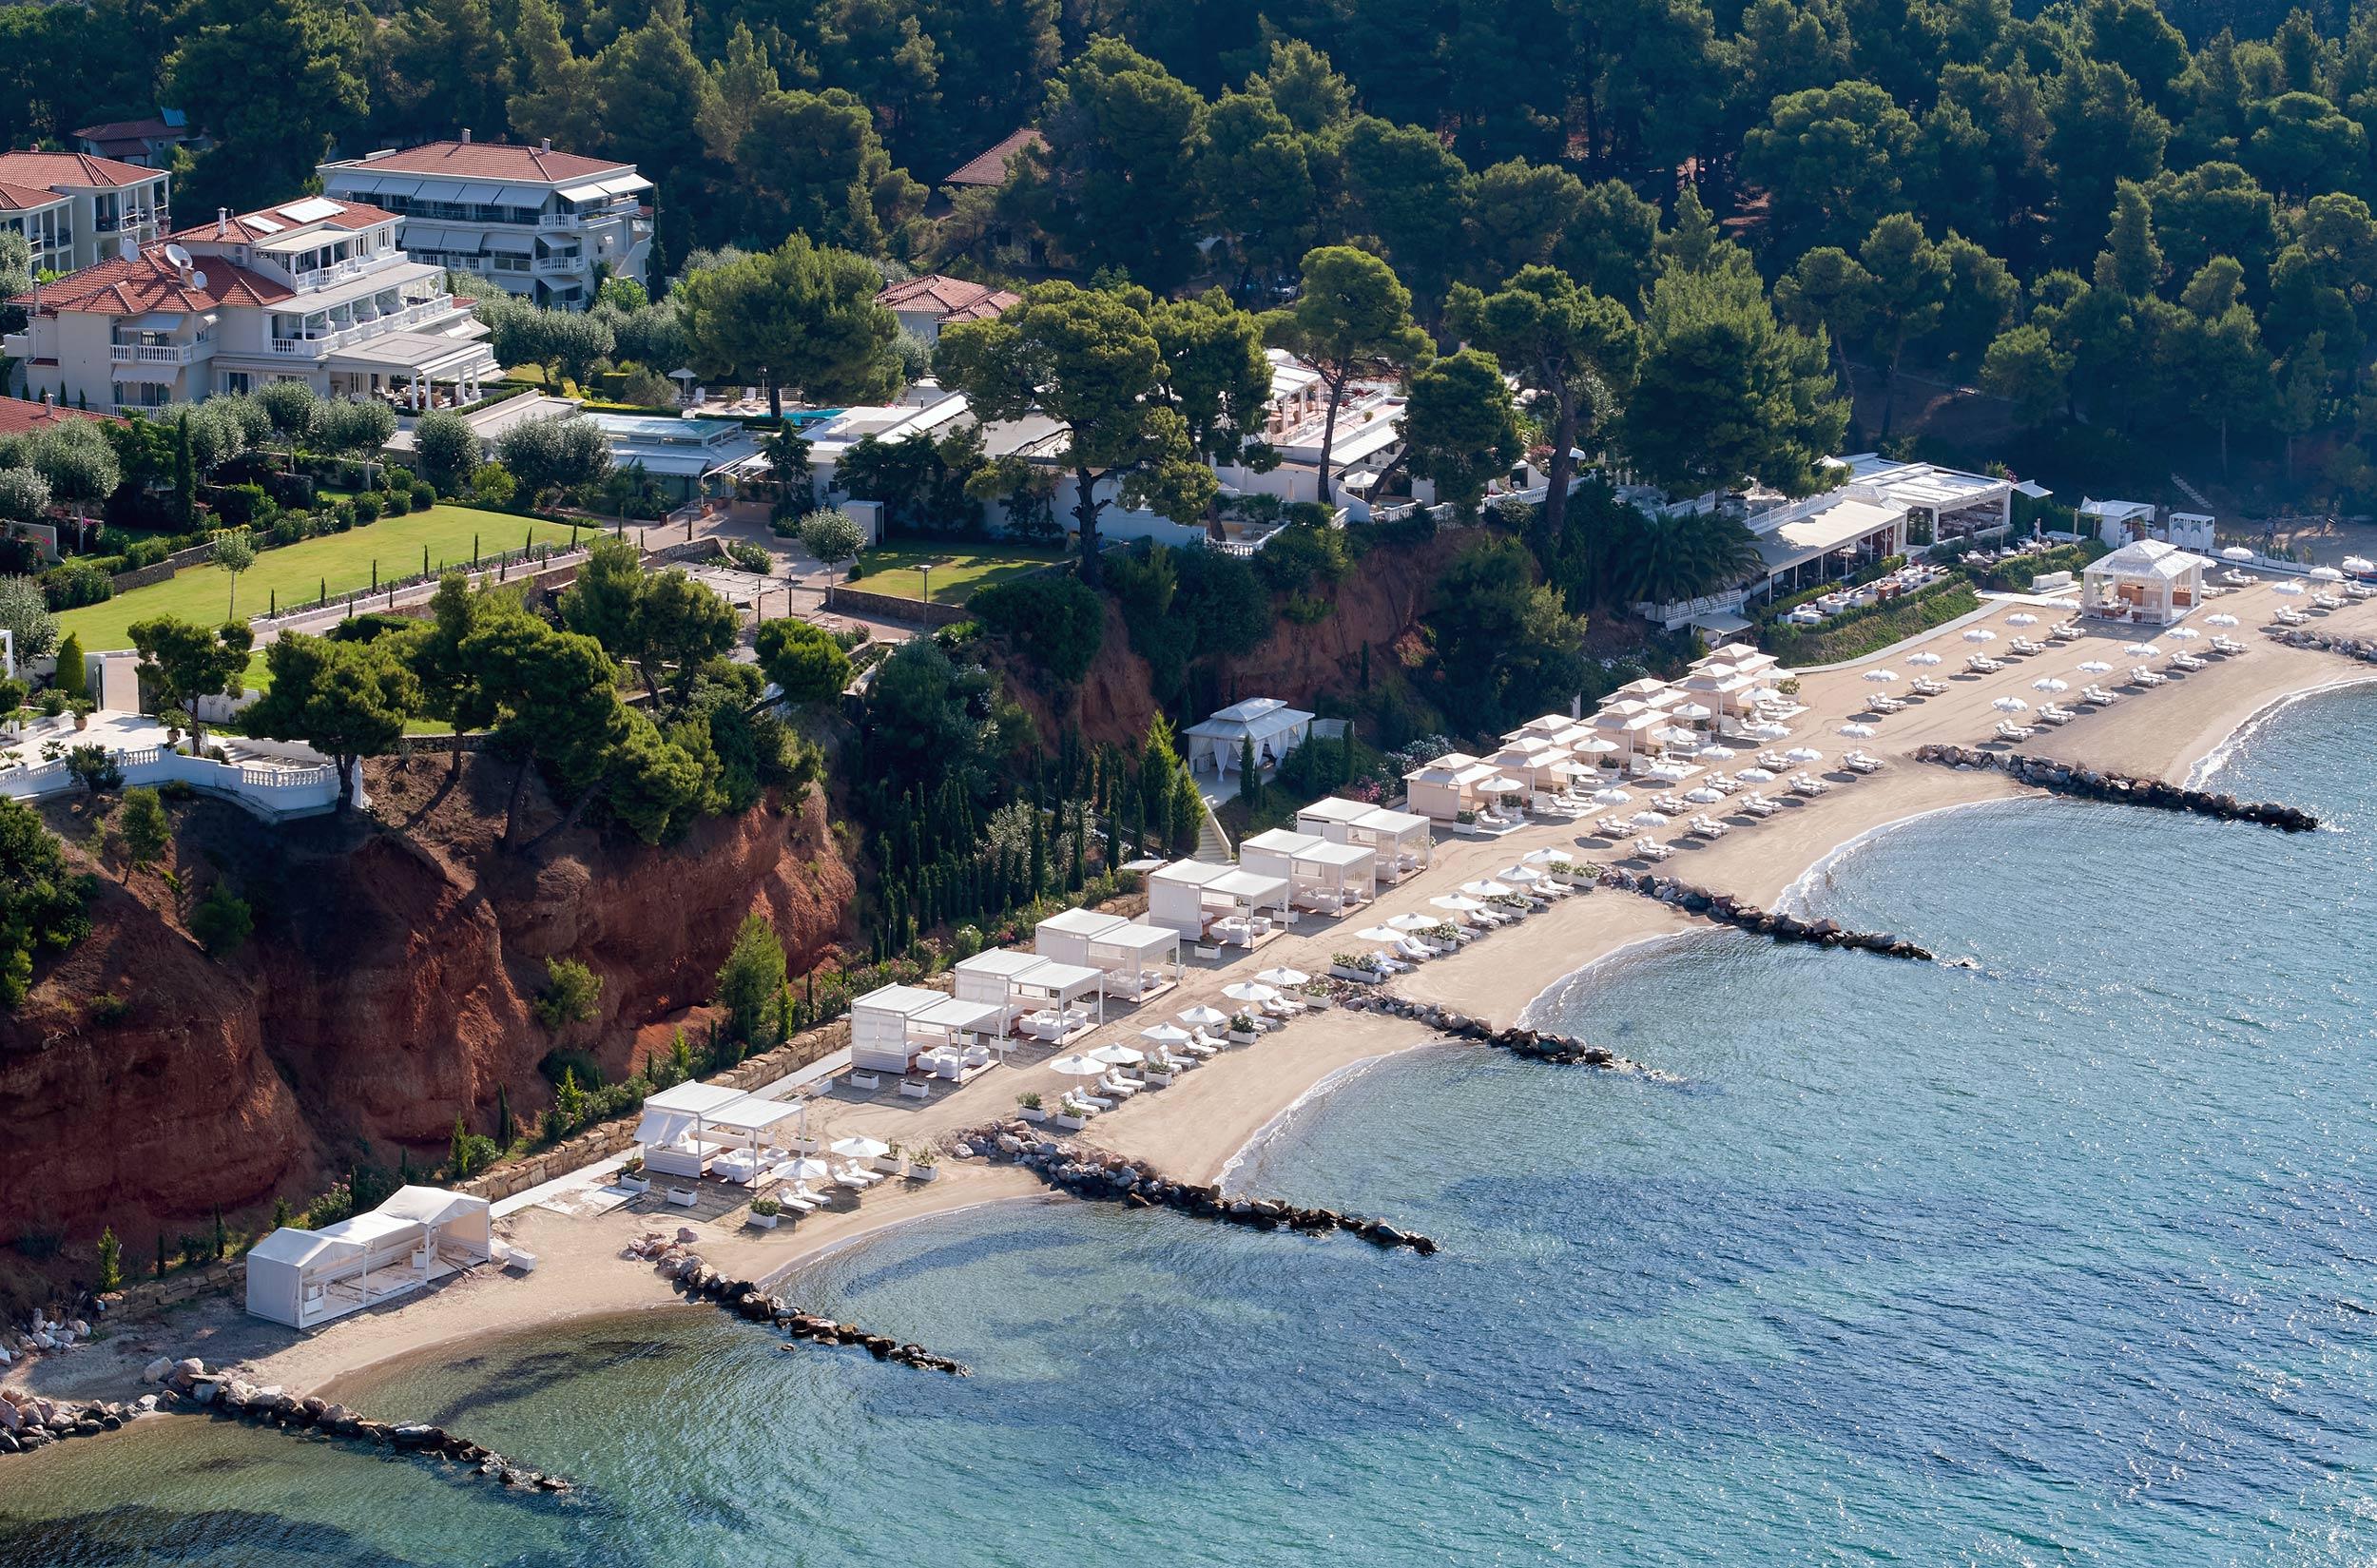 Danai Beach Resort, Greece, aerial view of resort